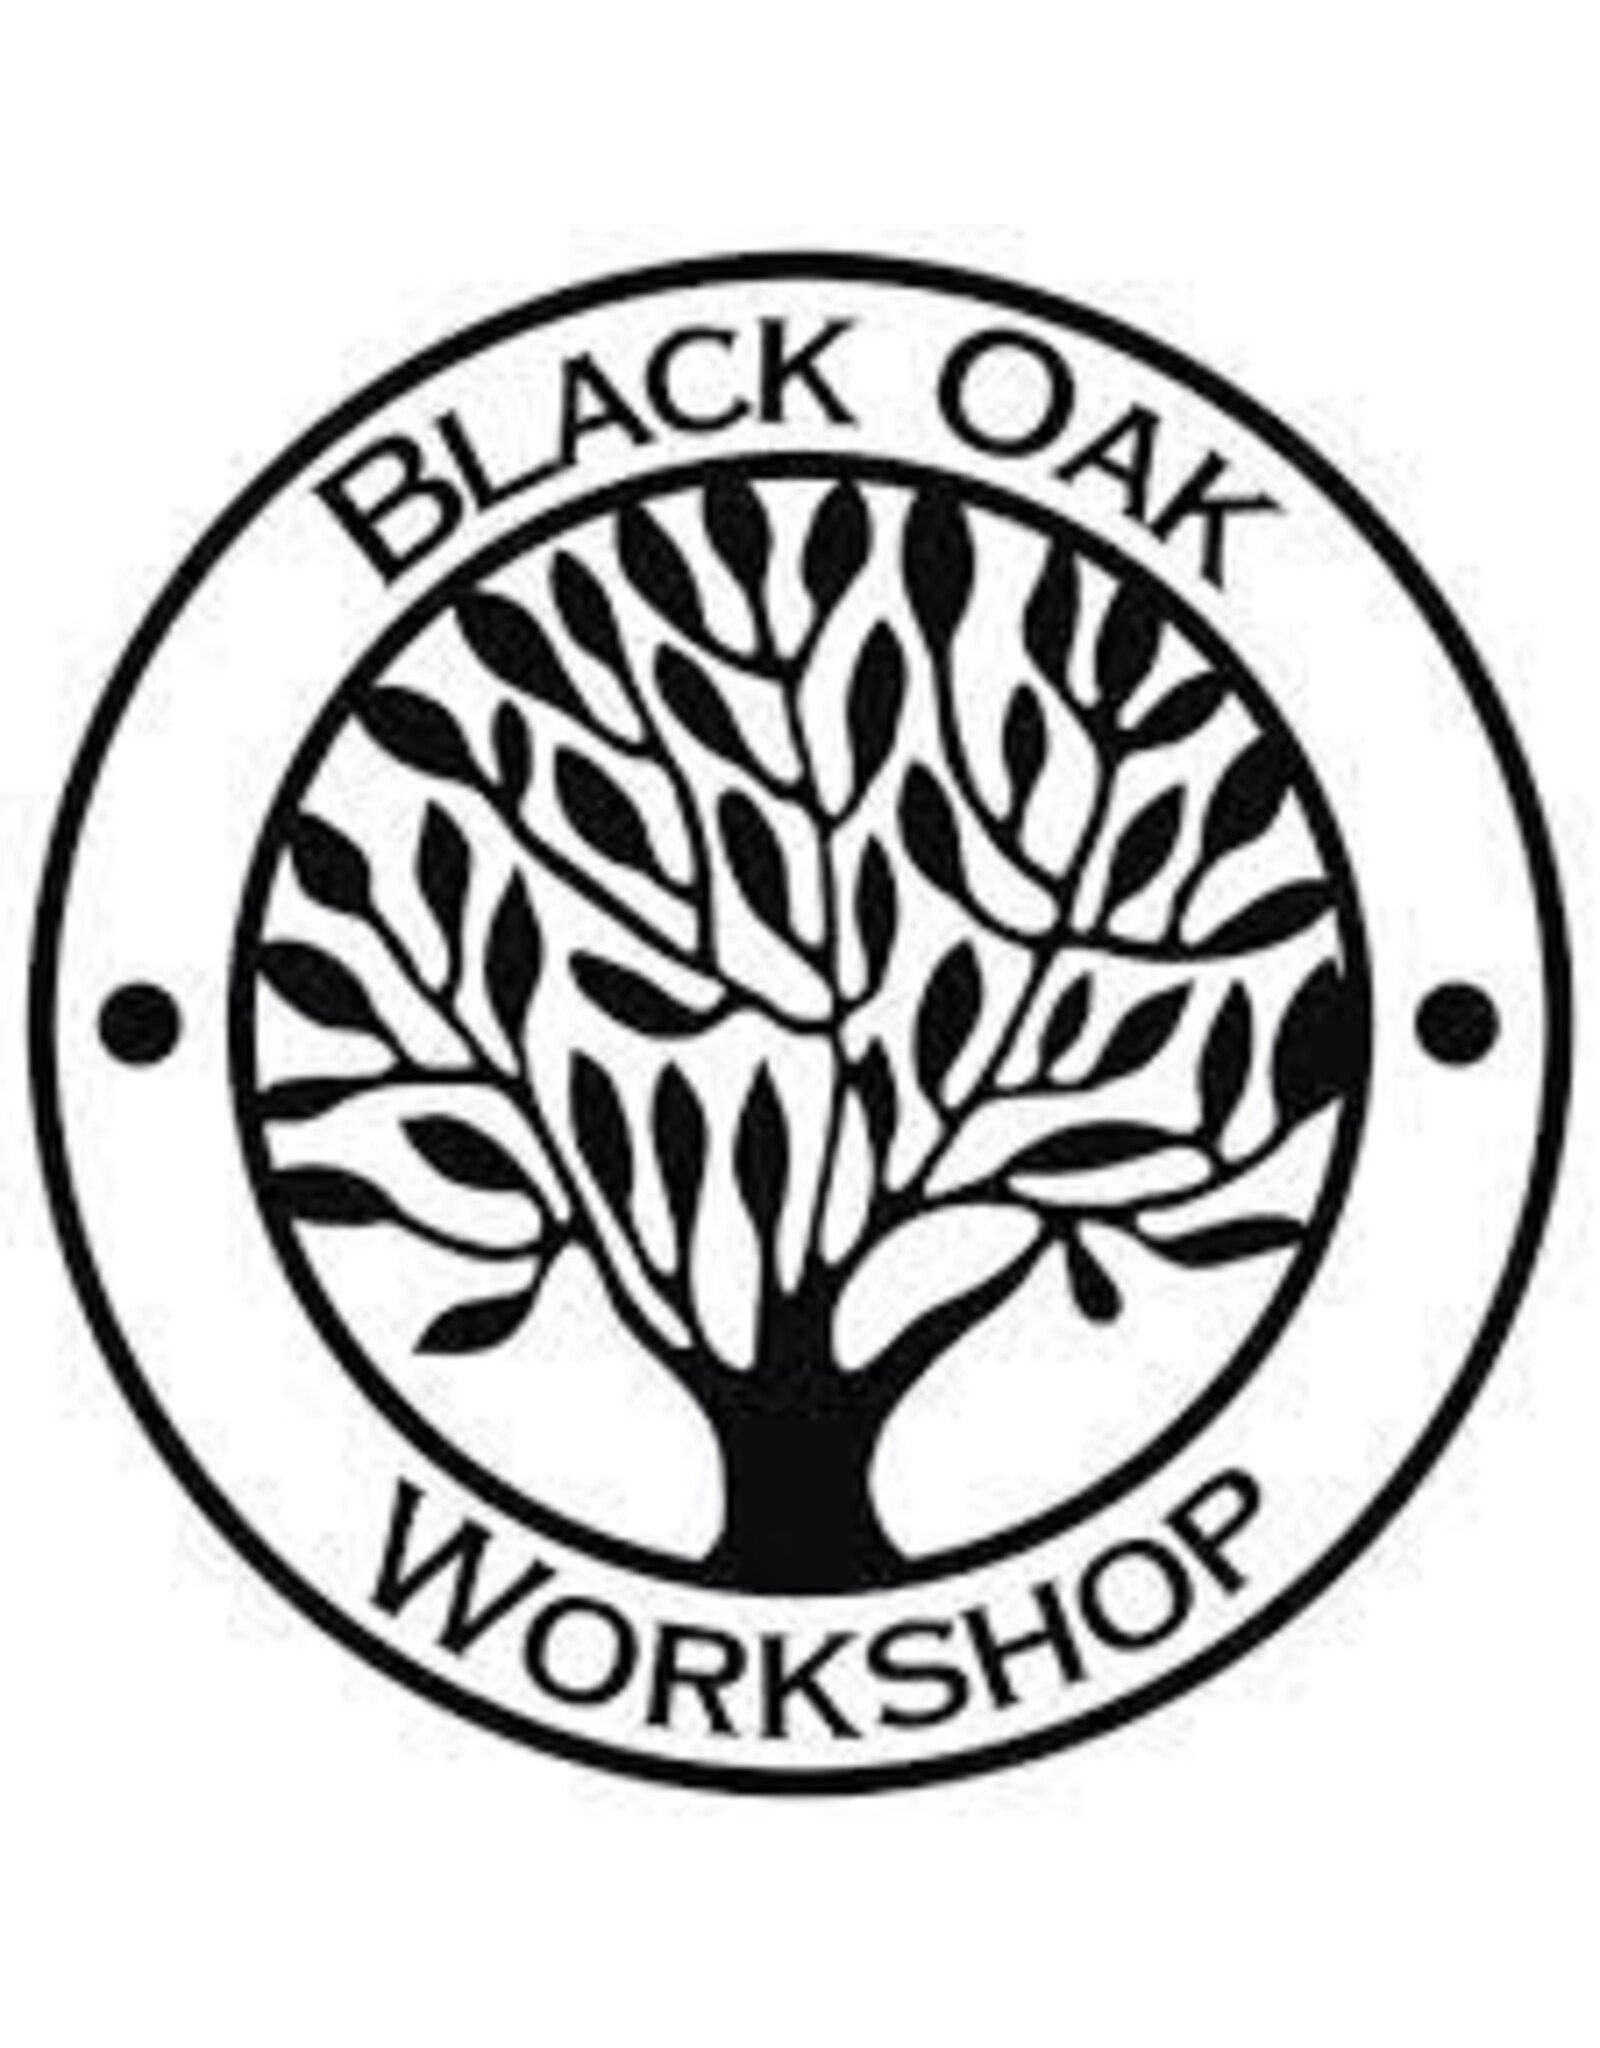 Black Oak Workshop Dice Bag: Bat d20